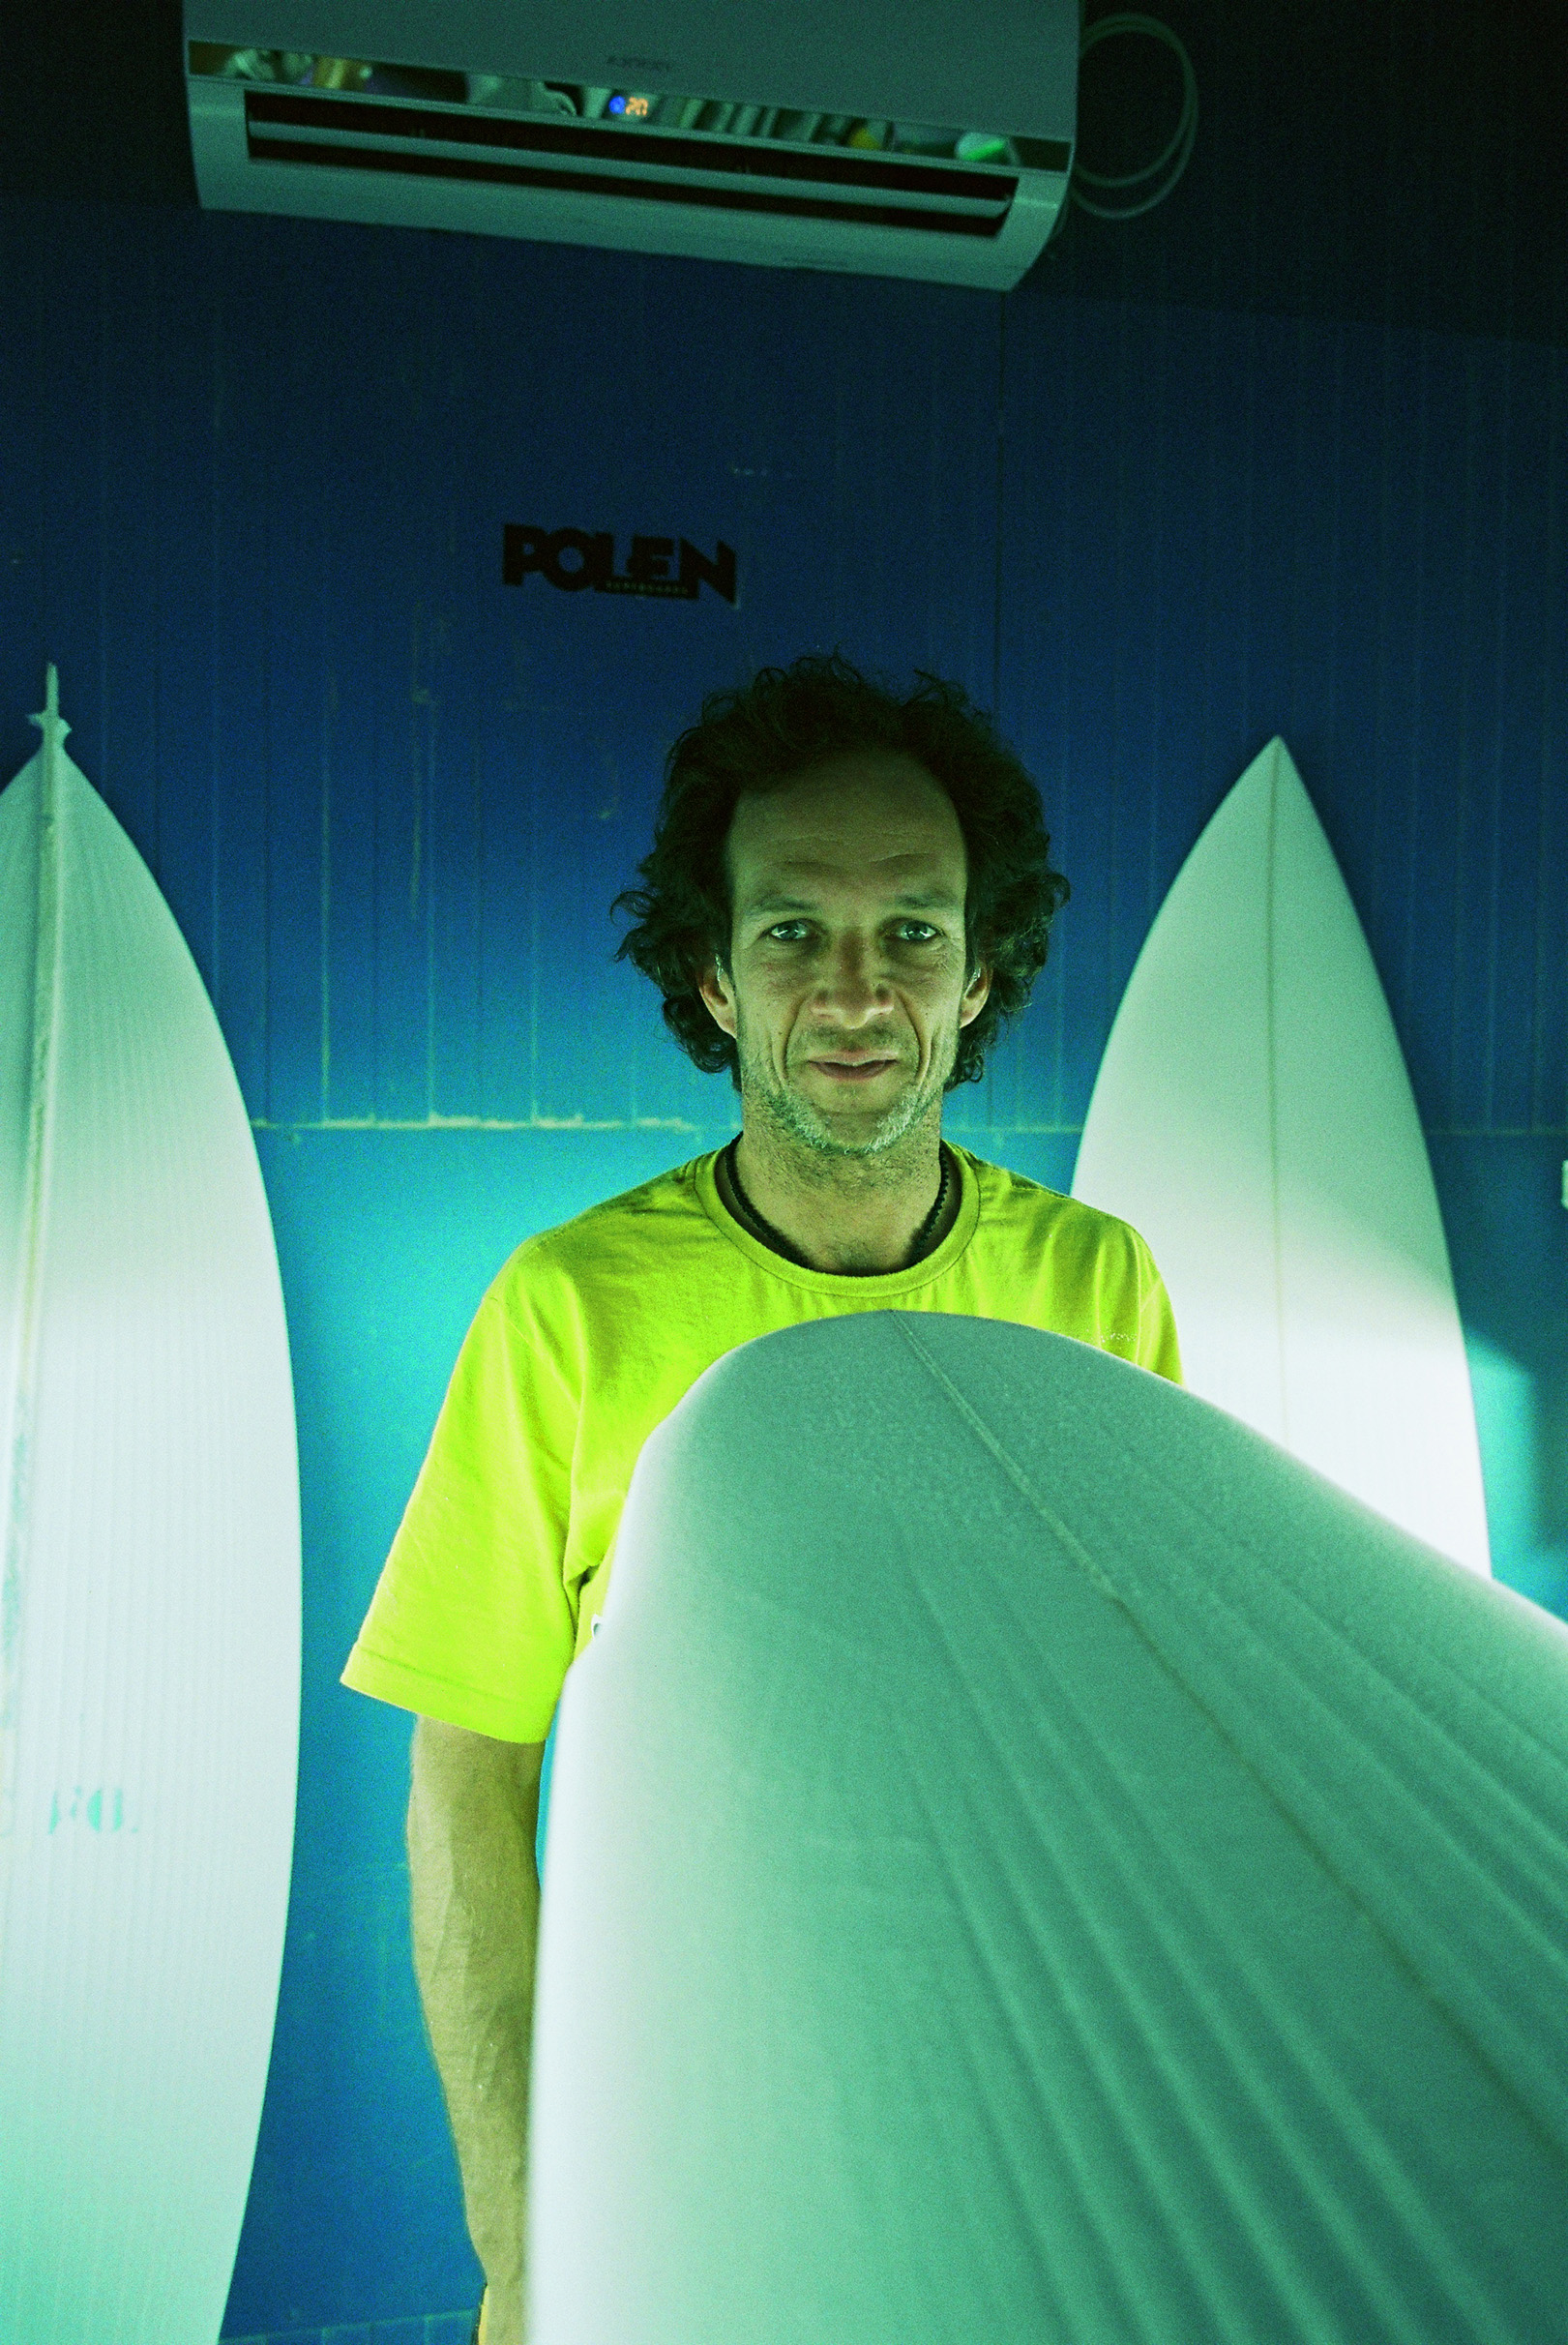 polen surfboard